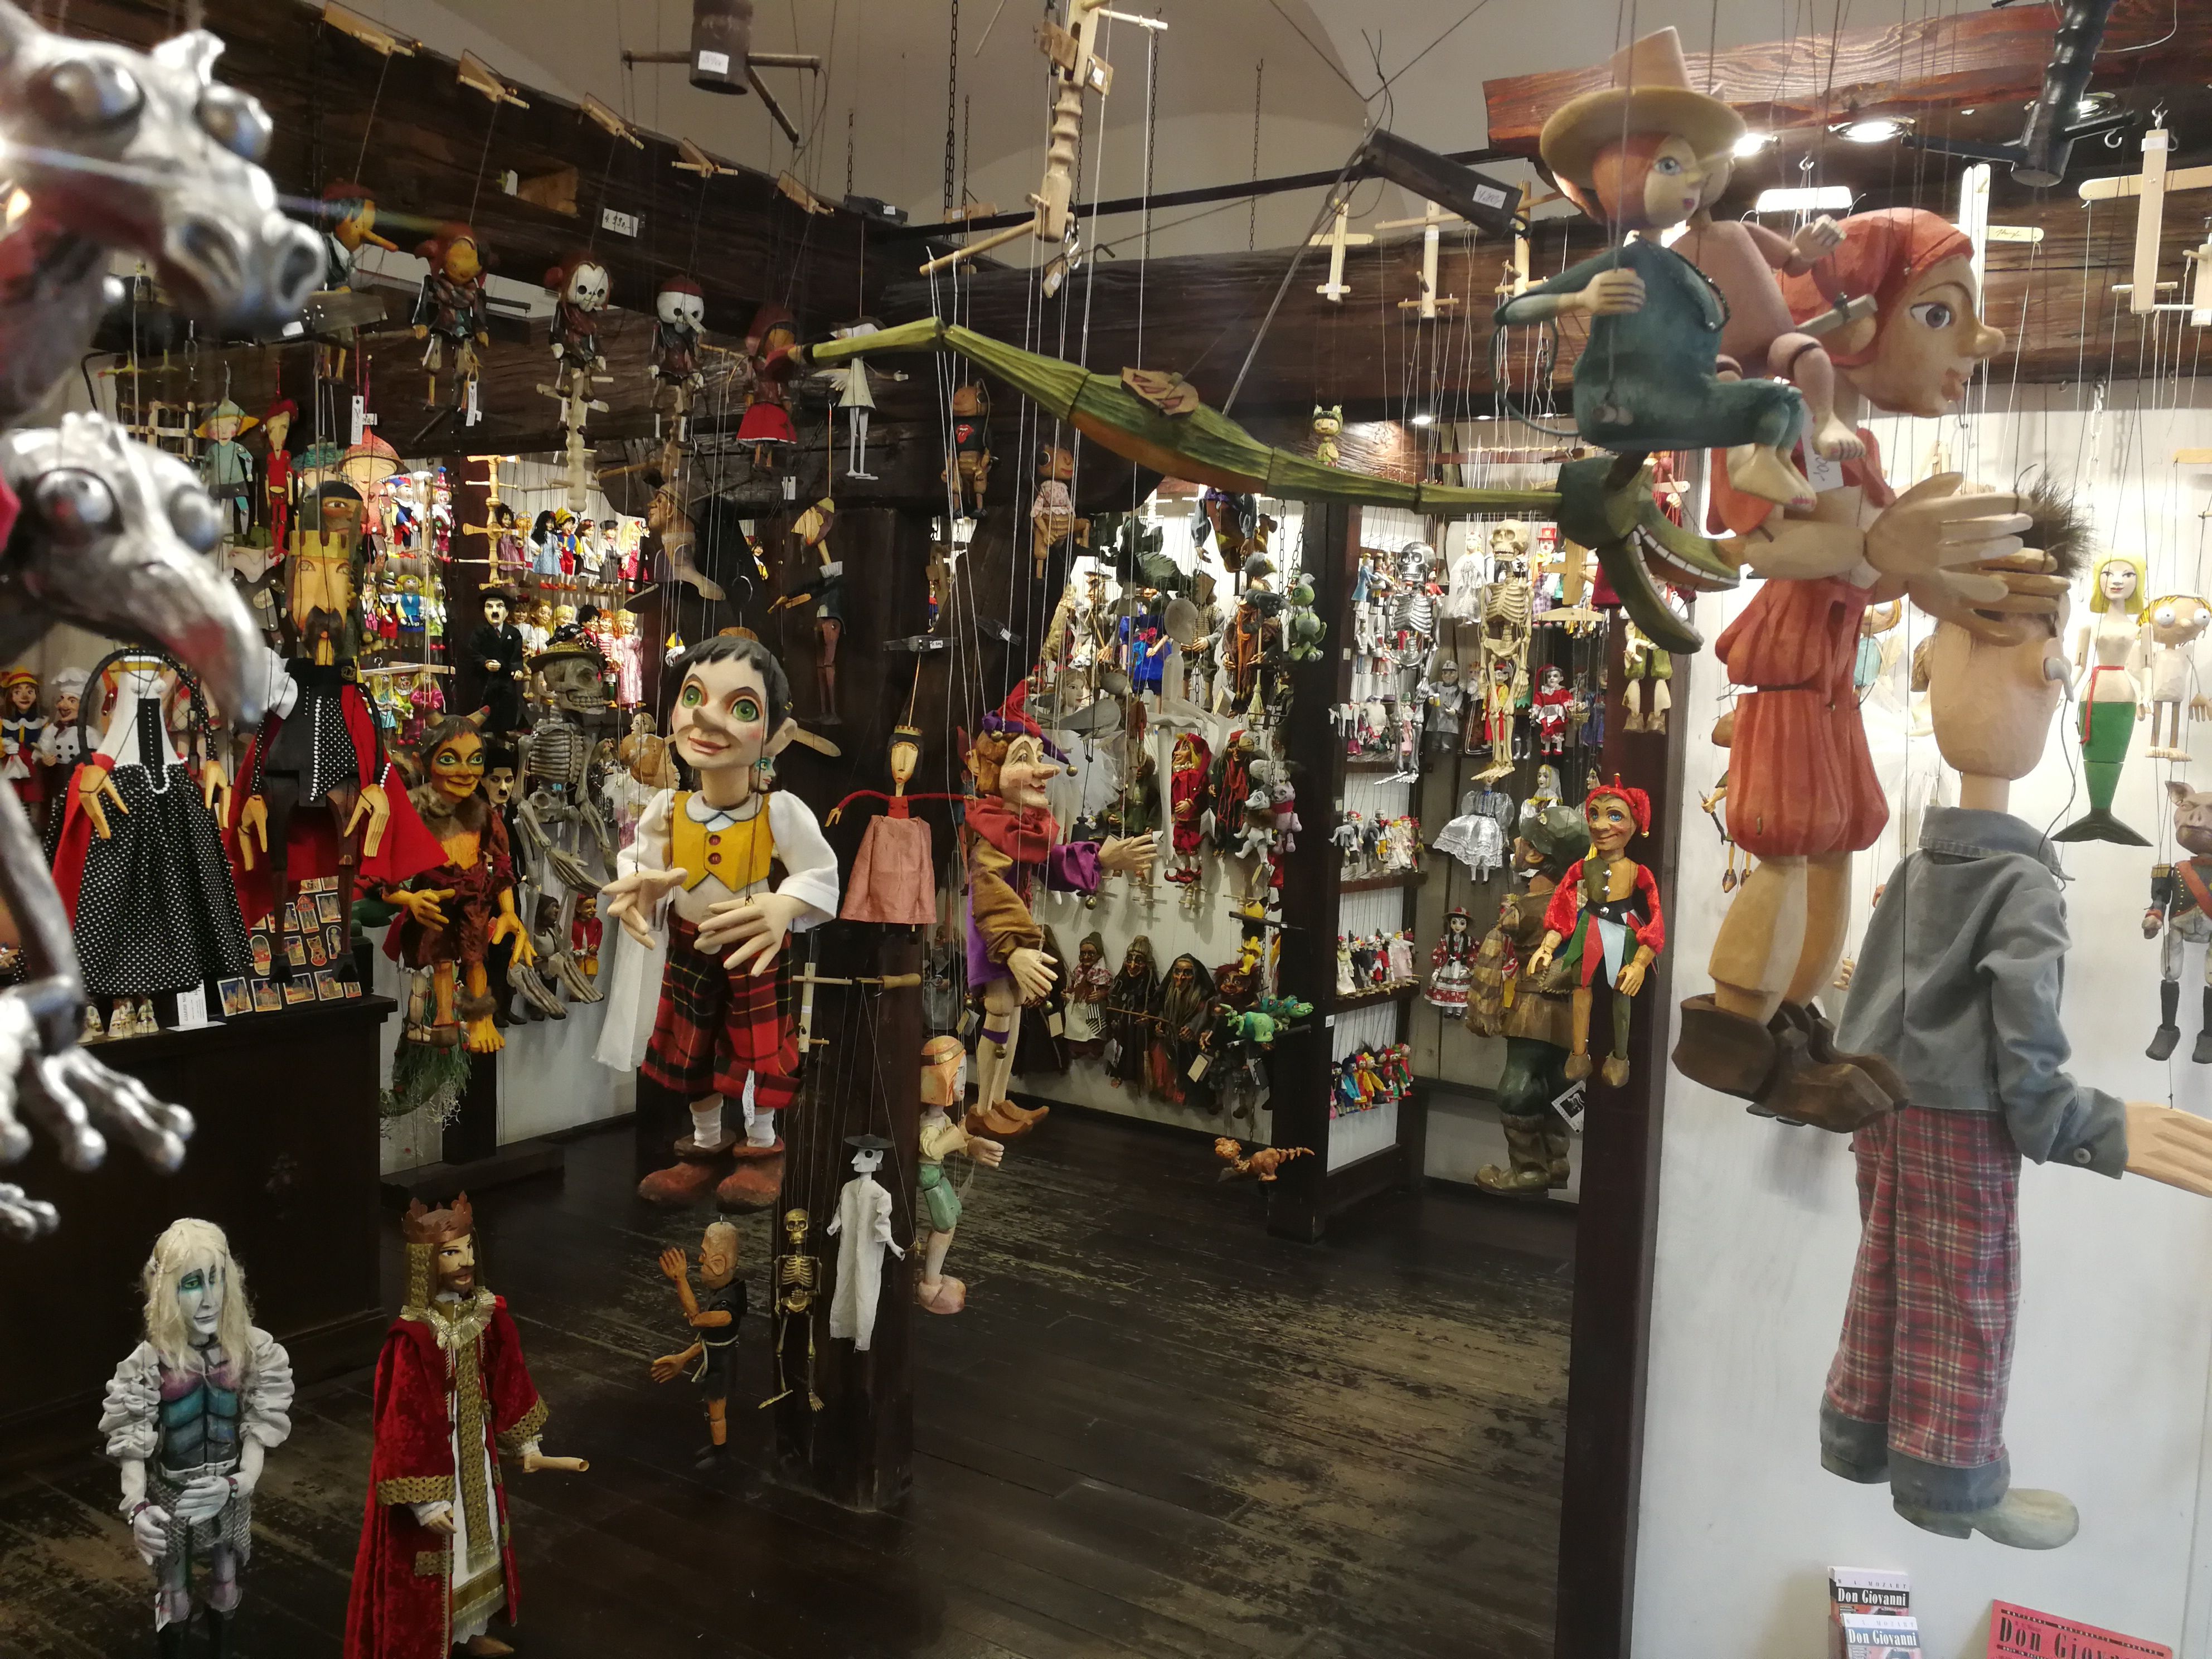 Galerie Michael, Marionette and Puppet Shop, Prague